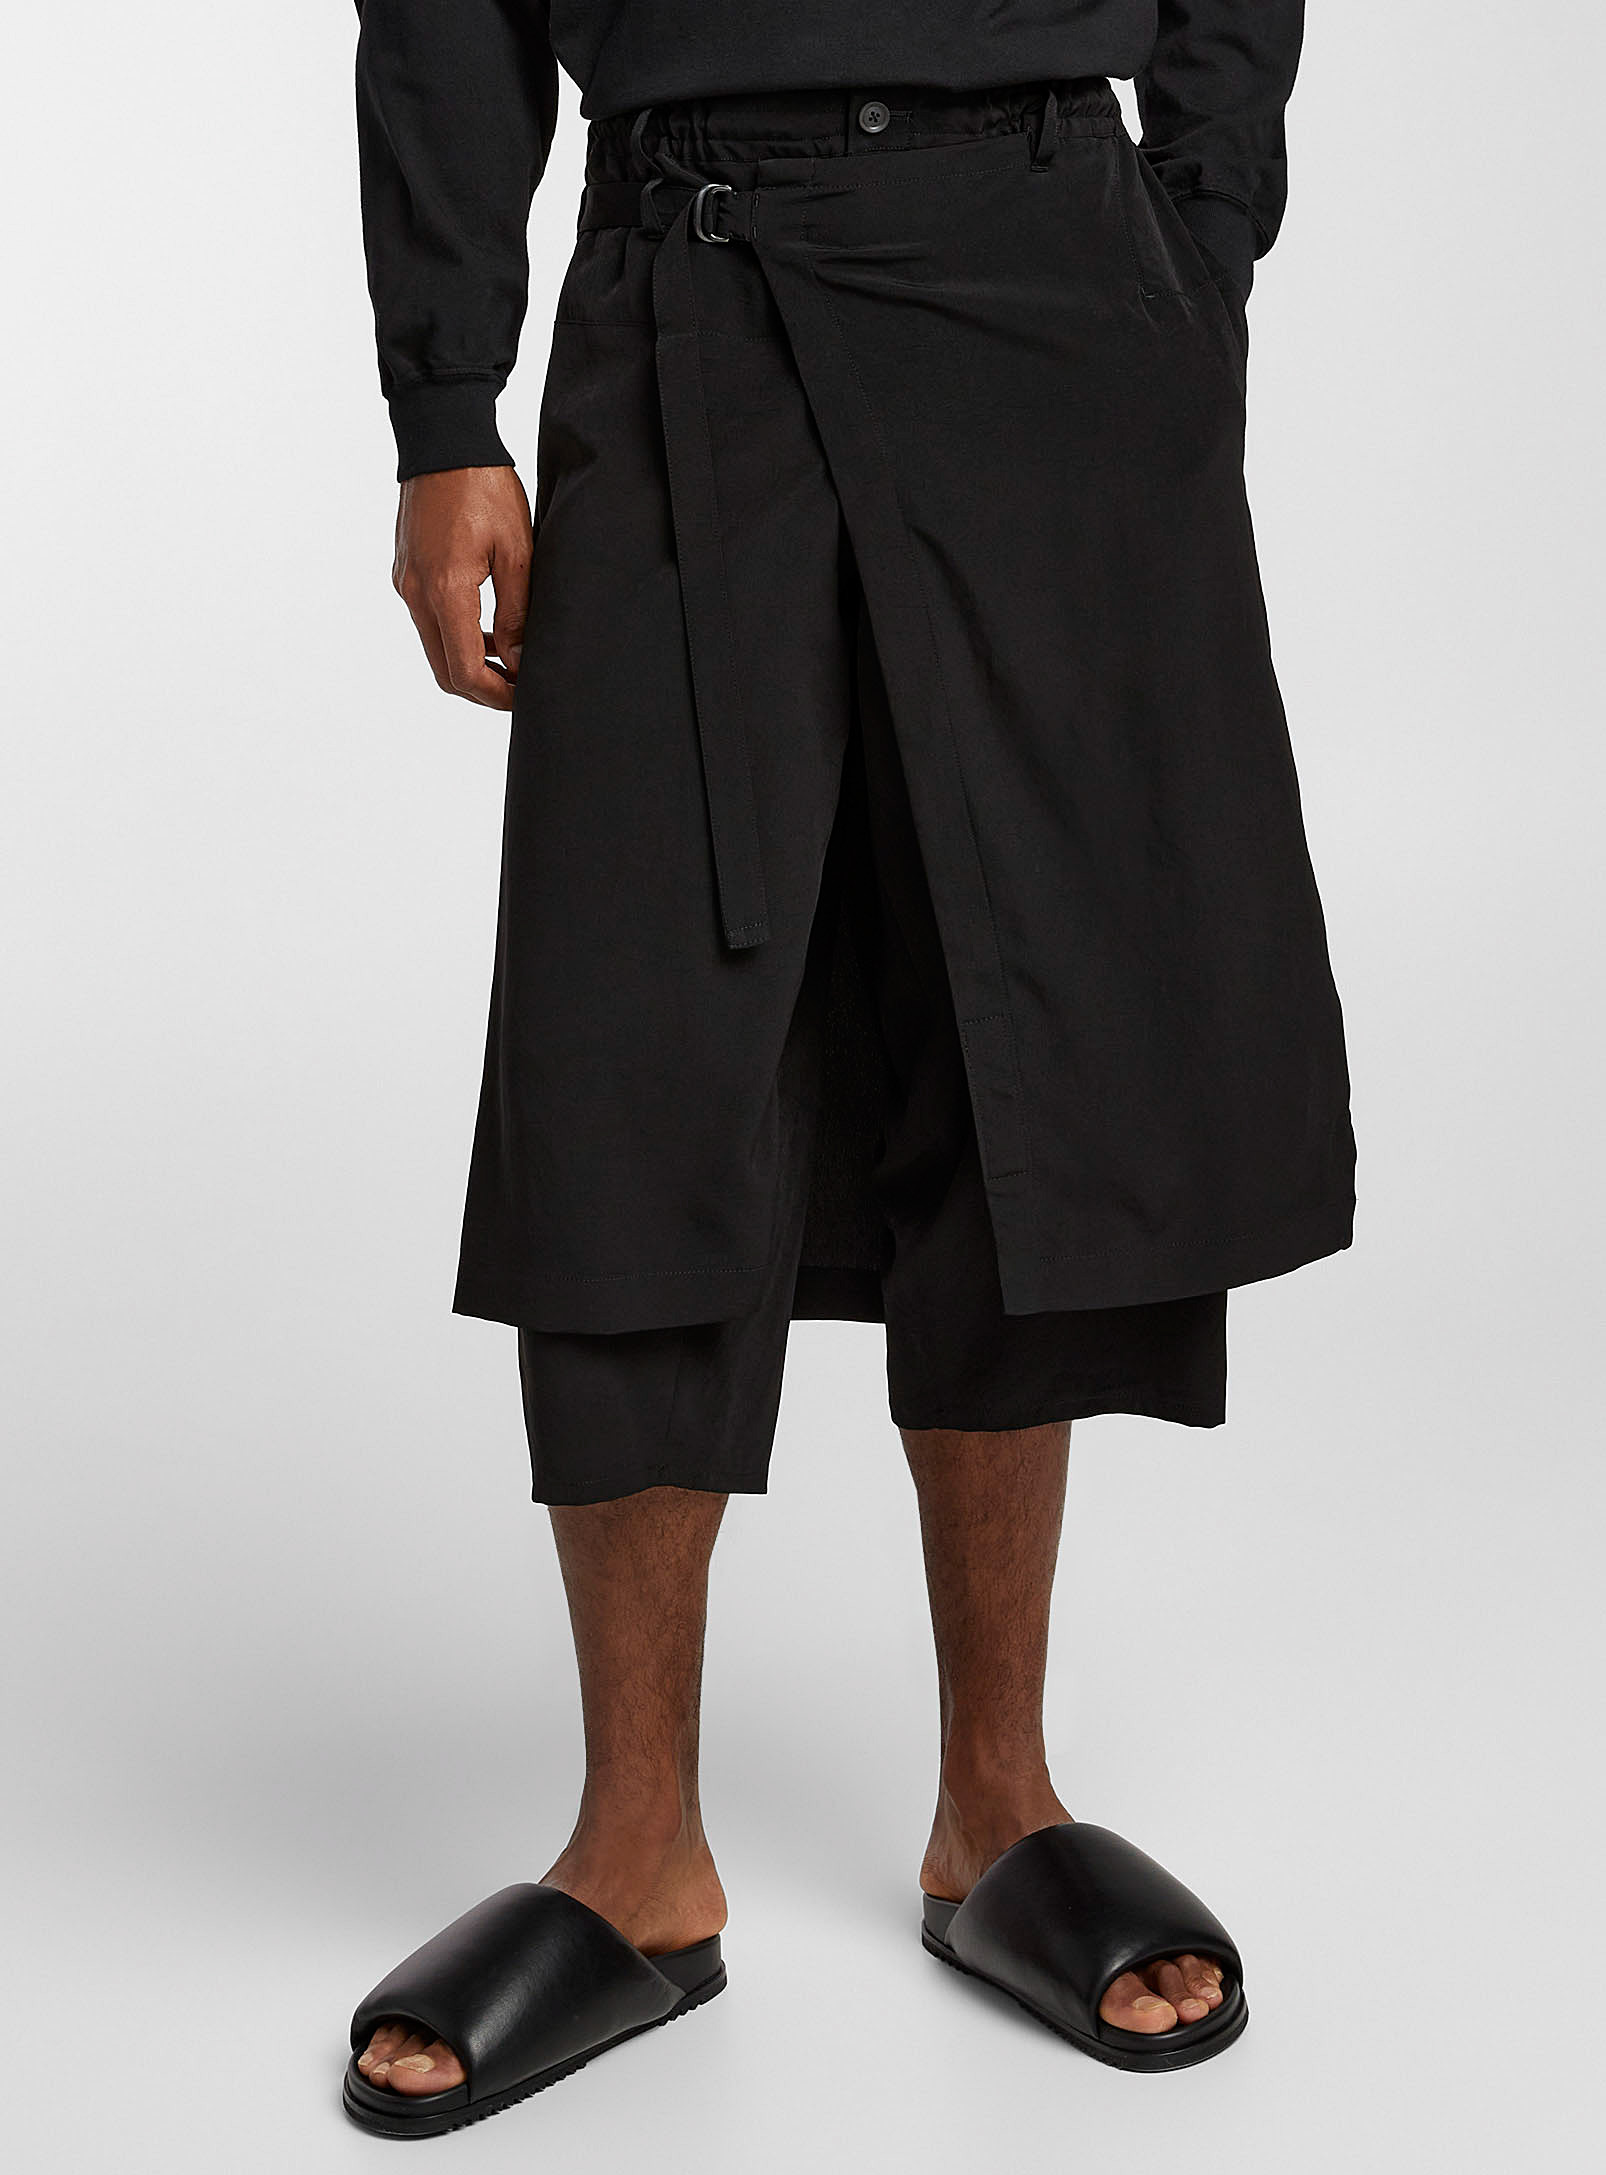 Yohji Yamamoto - Le pantalon soyeux jupe superposée